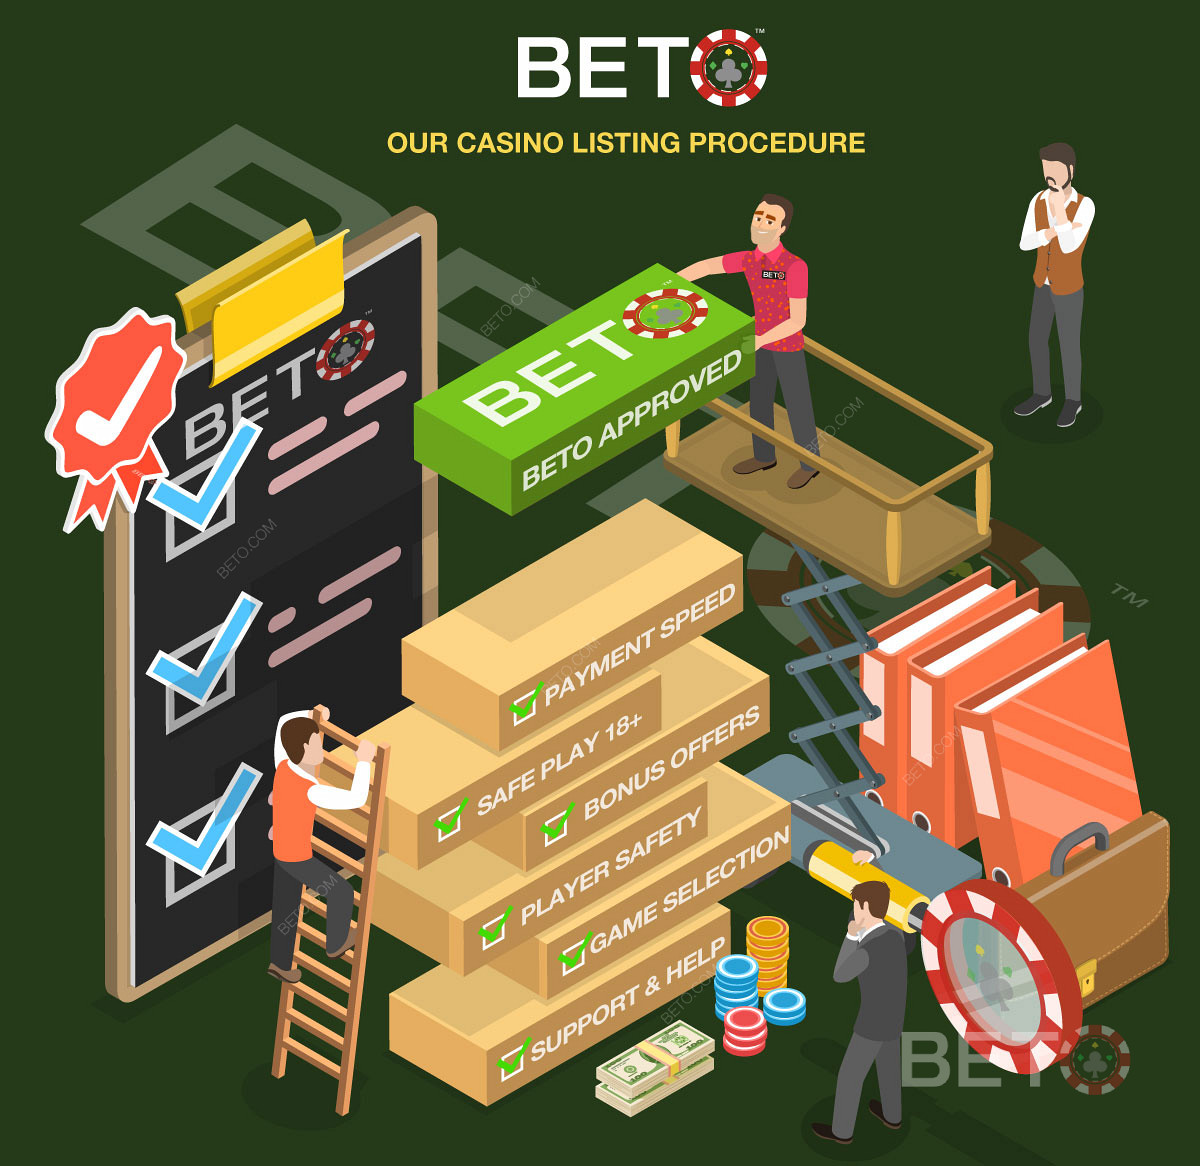 BETO.comの詳細なカジノレビュープロセス